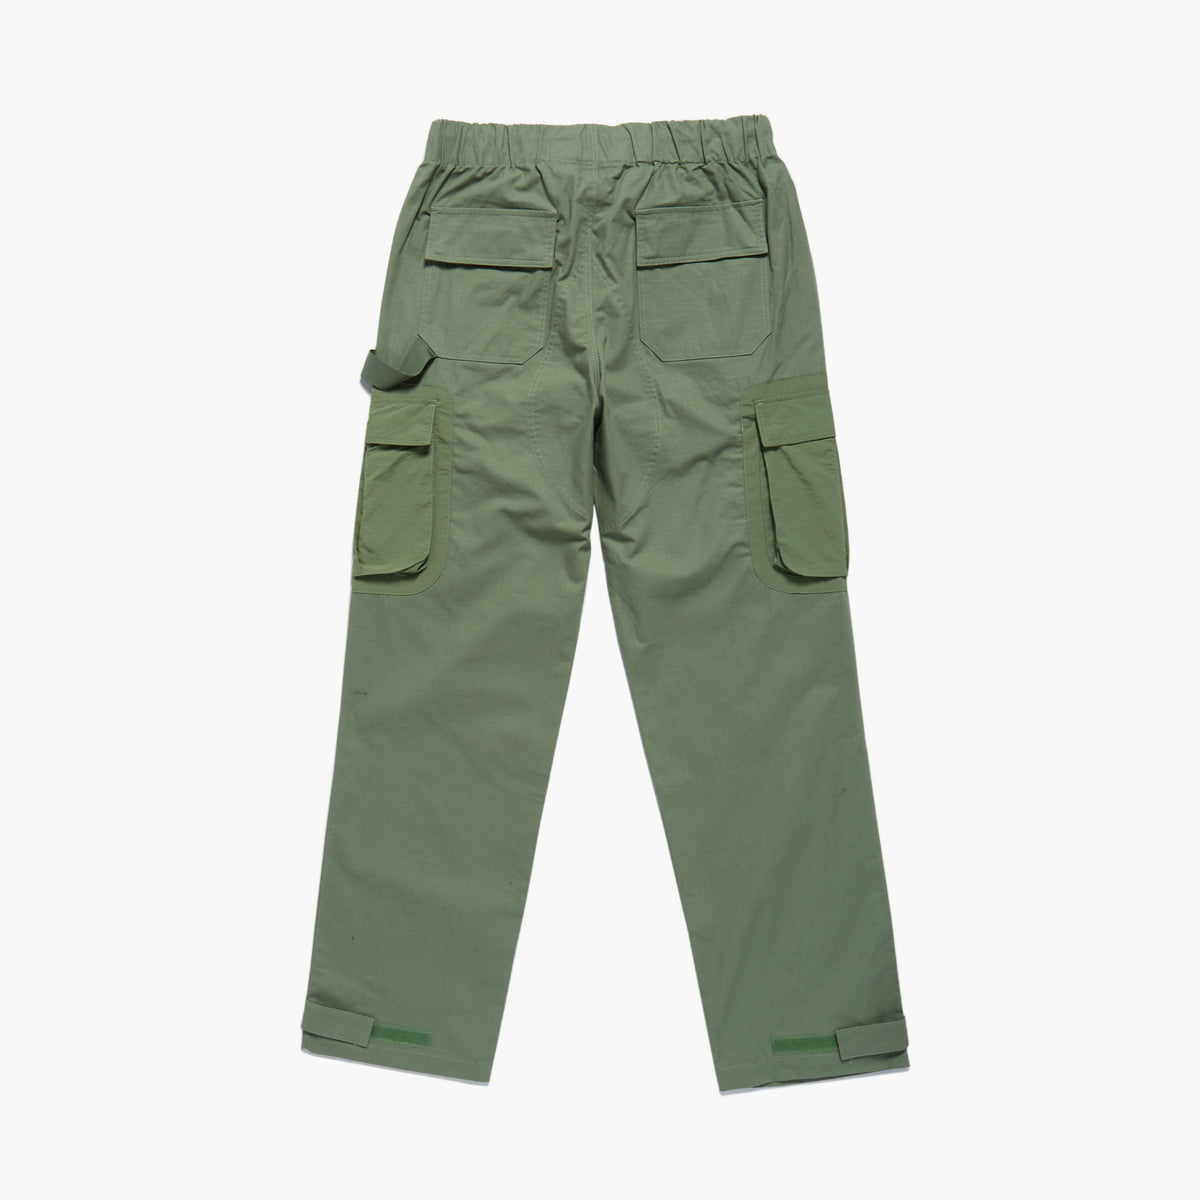 Soft Surroundings Green Cupro Cargo Pants Size PXS